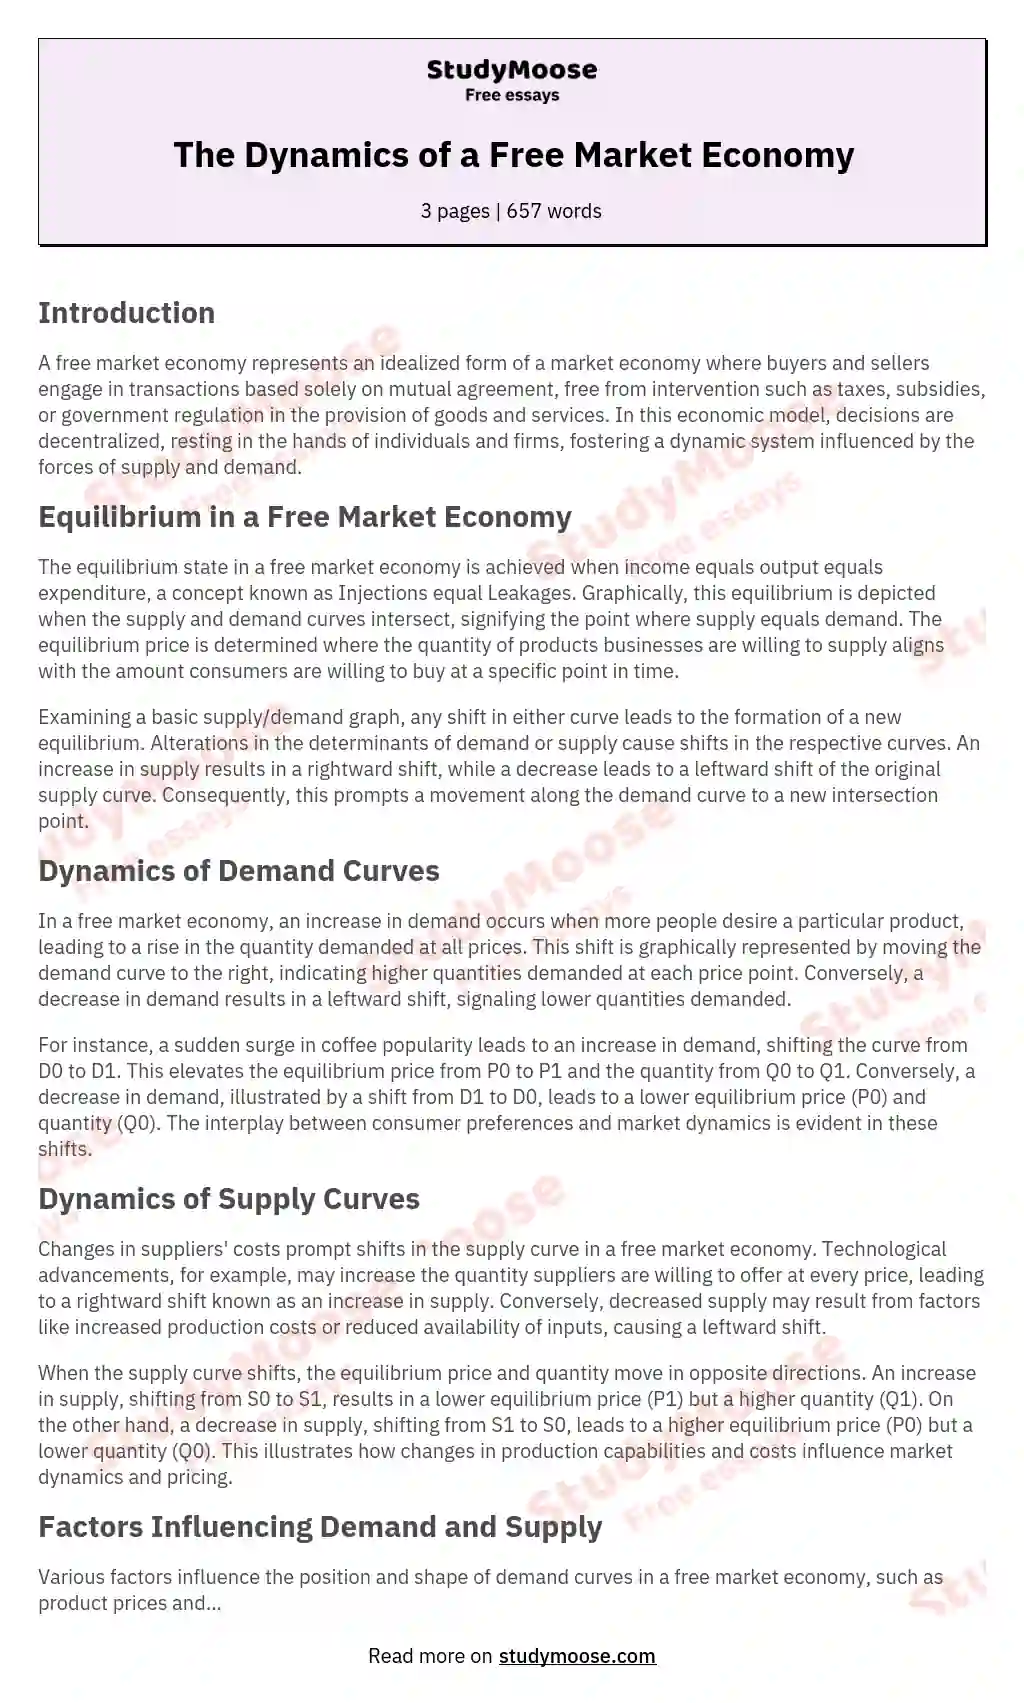 The Dynamics of a Free Market Economy essay